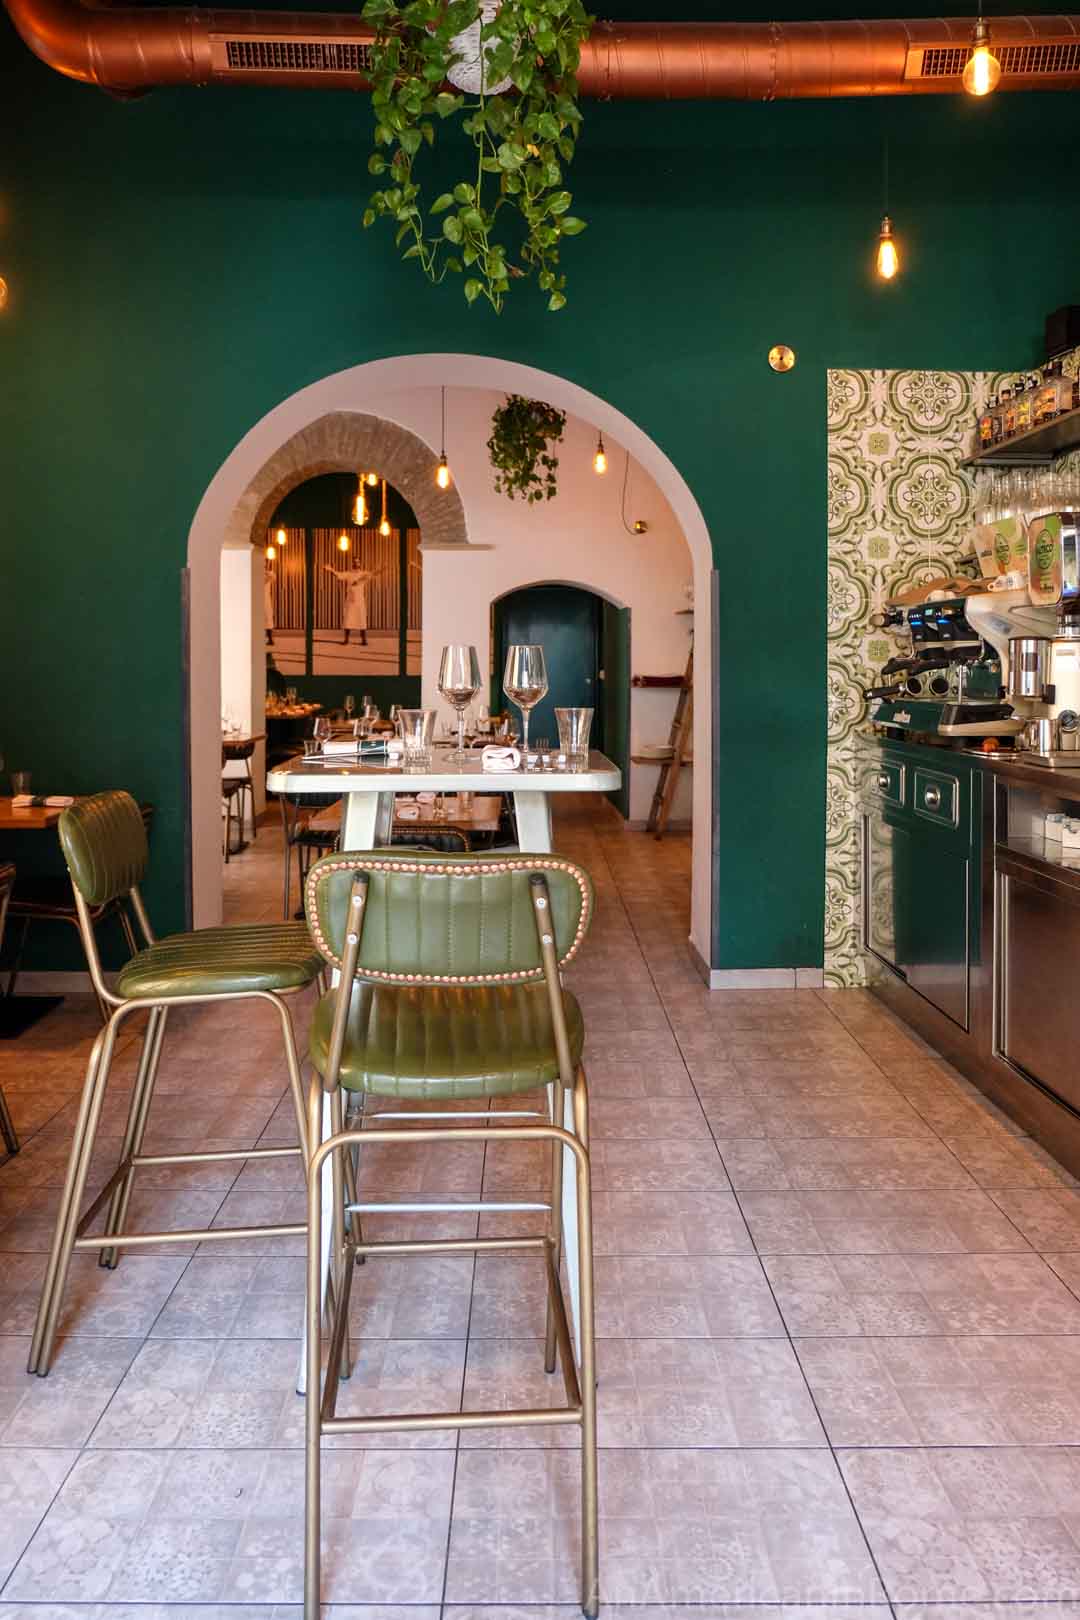 Interior stools and green wall inside Luciano Cucina Italiana restaurant in Rome